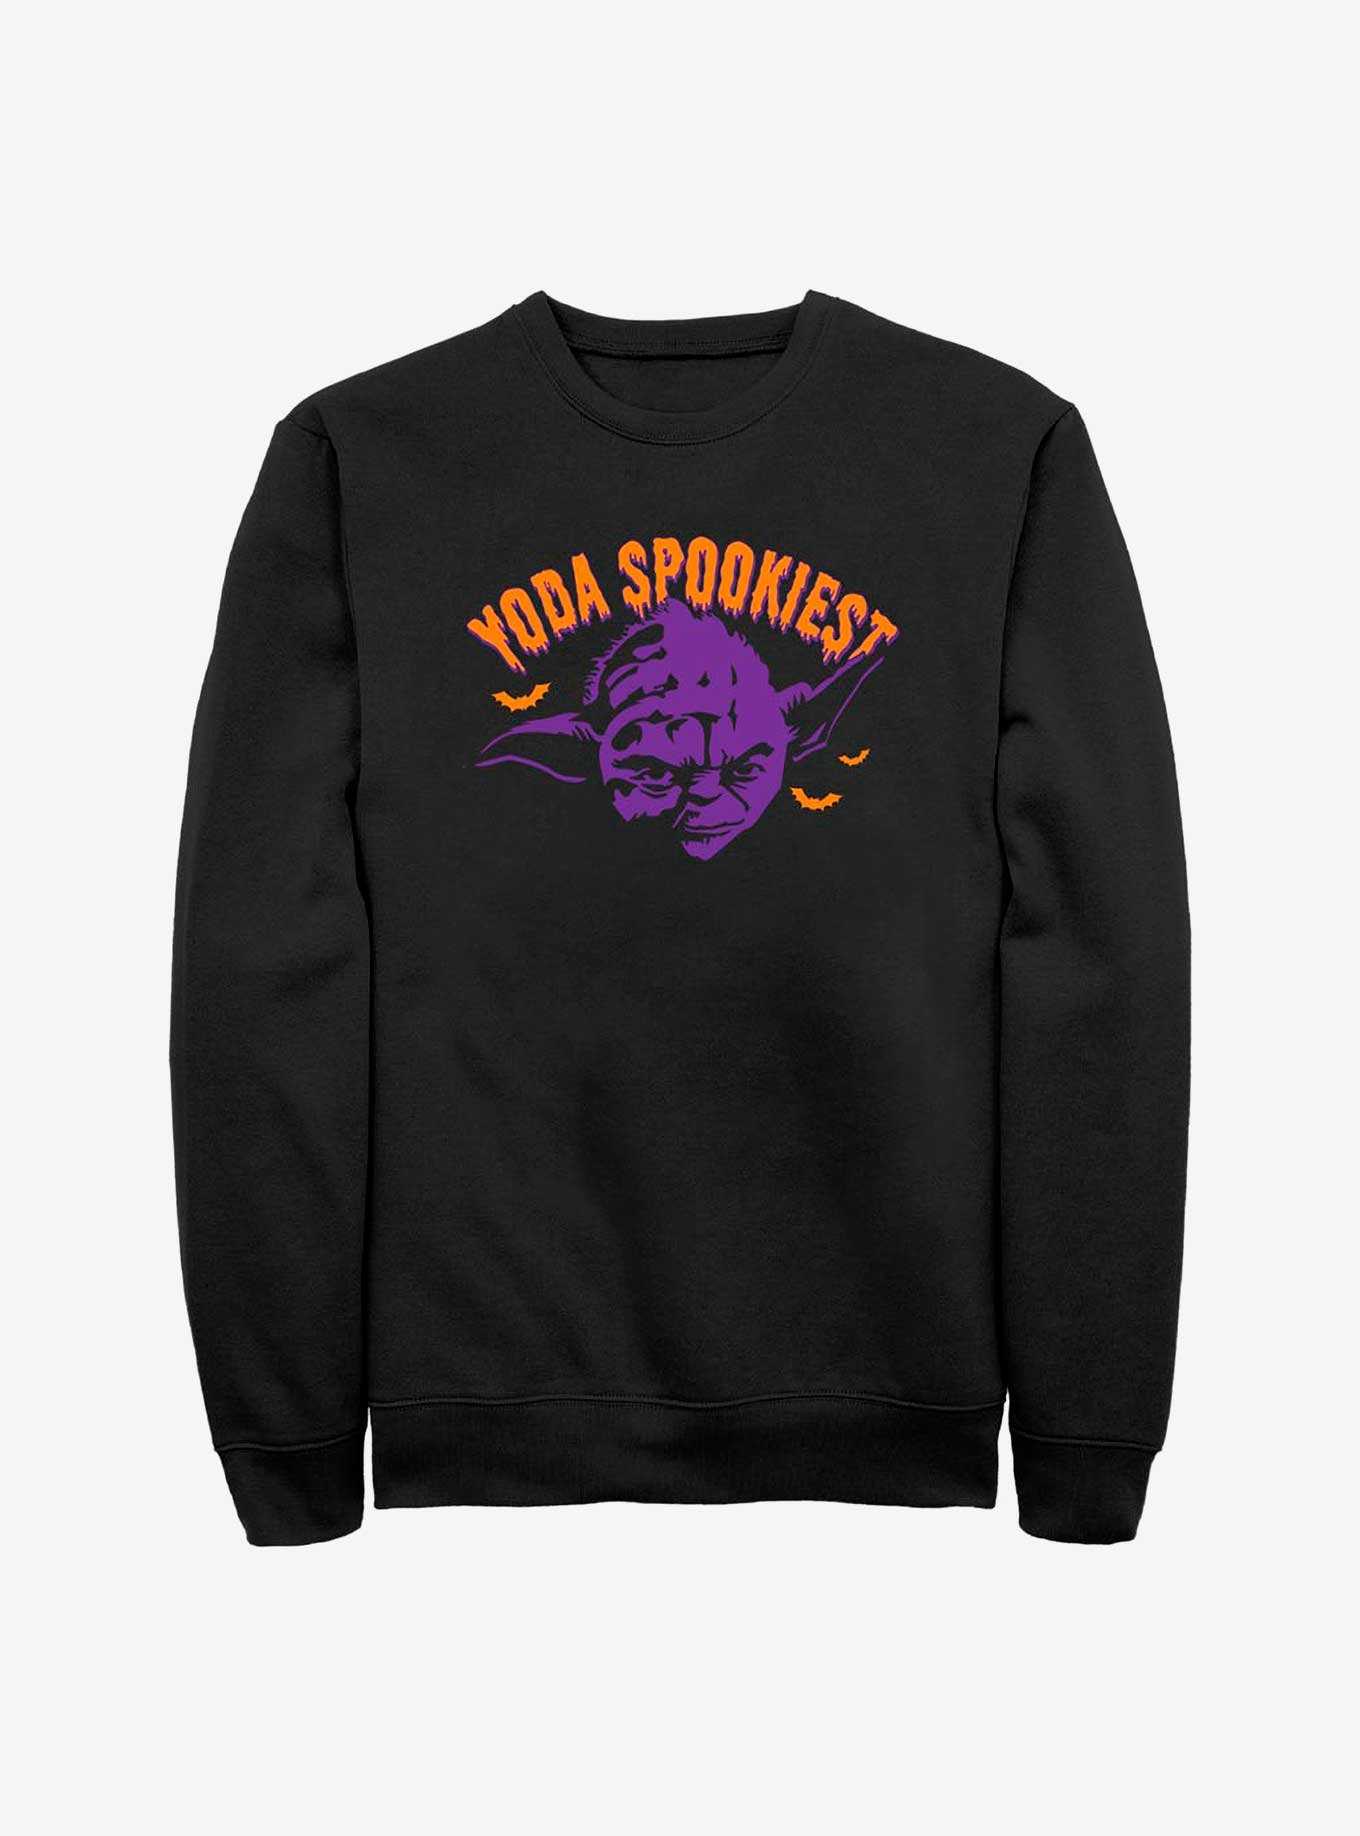 Star Wars Spooky Yoda Spookiest Sweatshirt, , hi-res